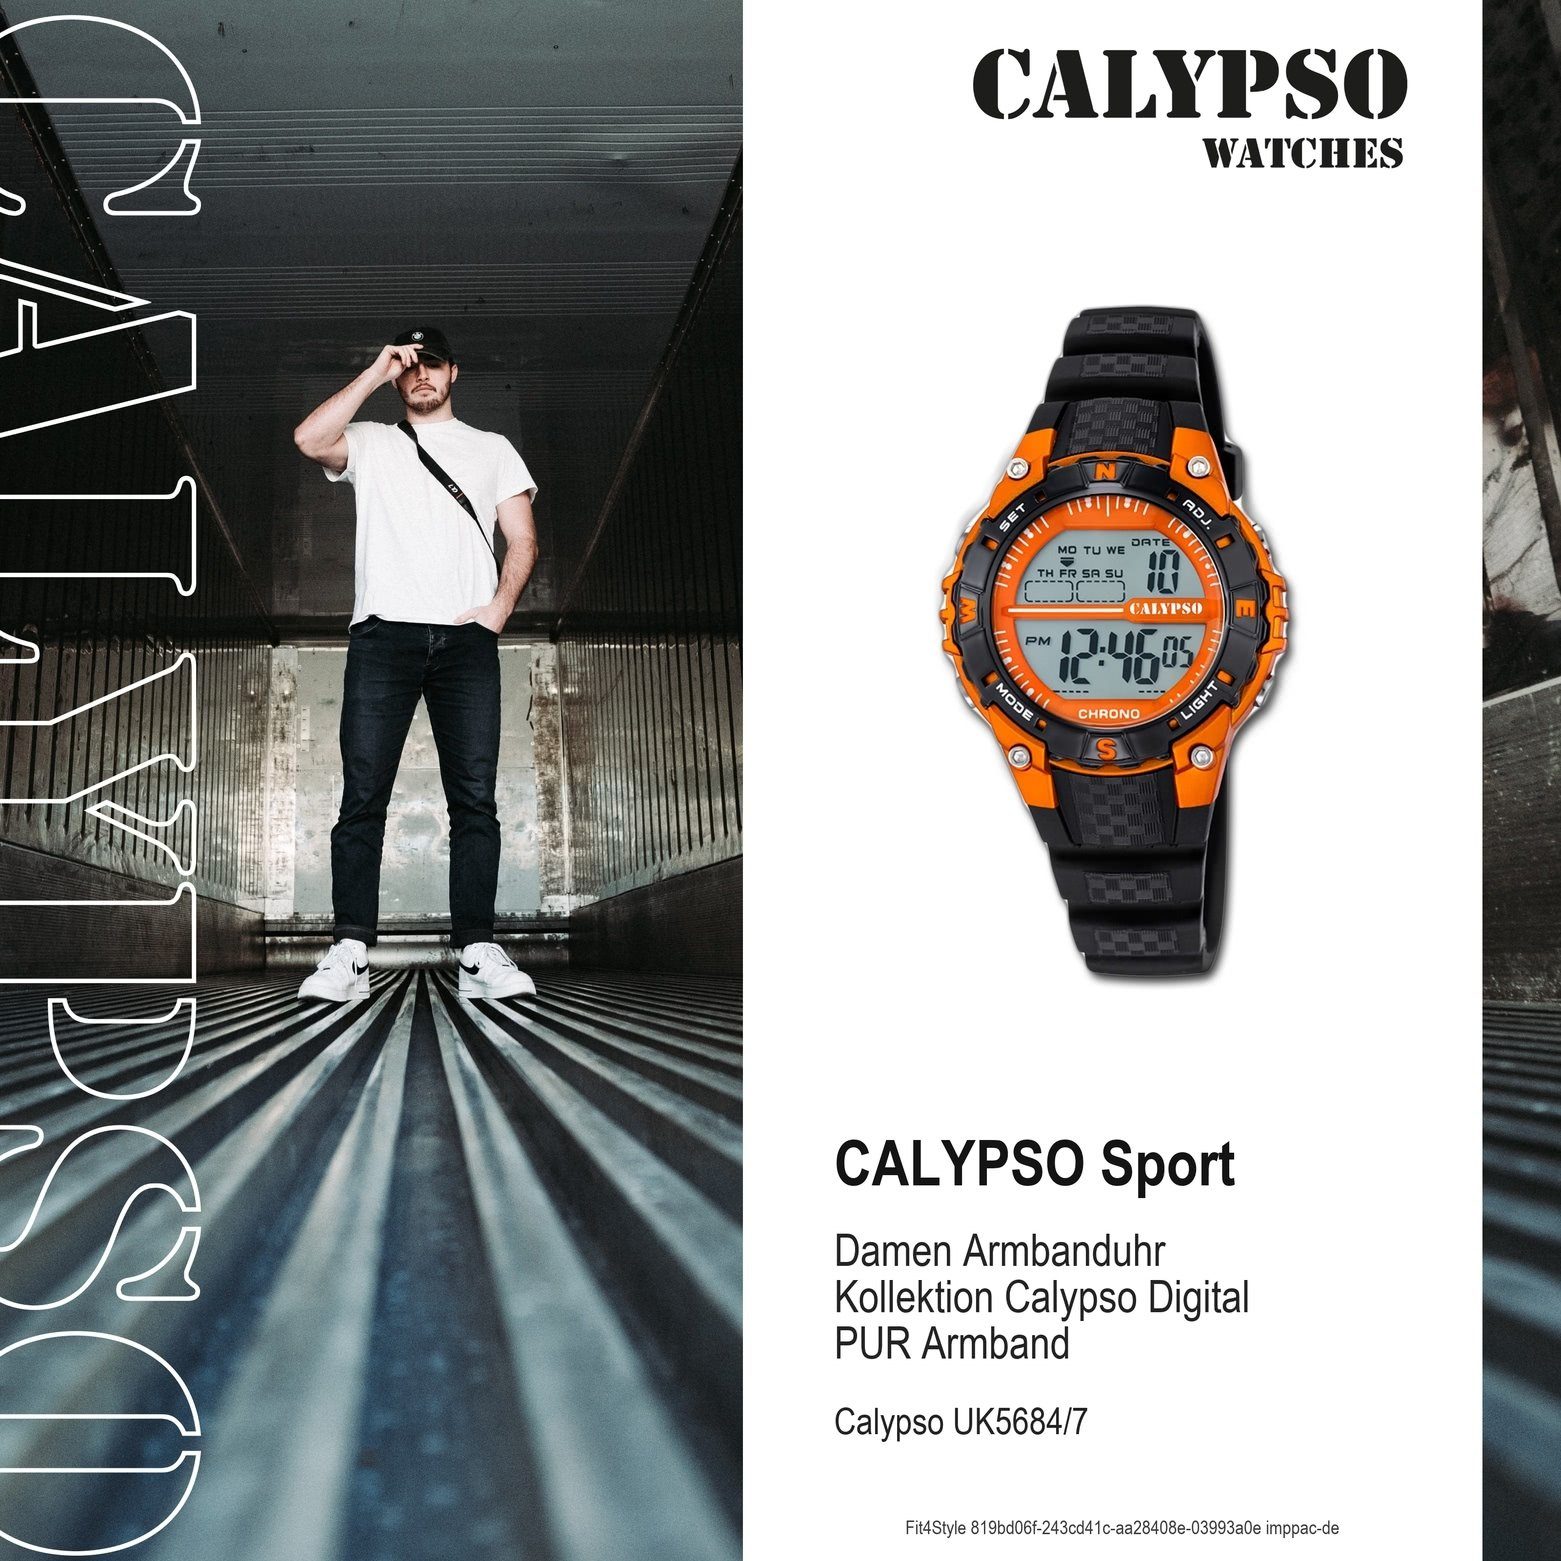 Herren Uhren CALYPSO WATCHES Digitaluhr UK5684/7 Calypso Unisex Uhr K5684/7 Kunststoffband, Damen, Herren Armbanduhr rund, PURar